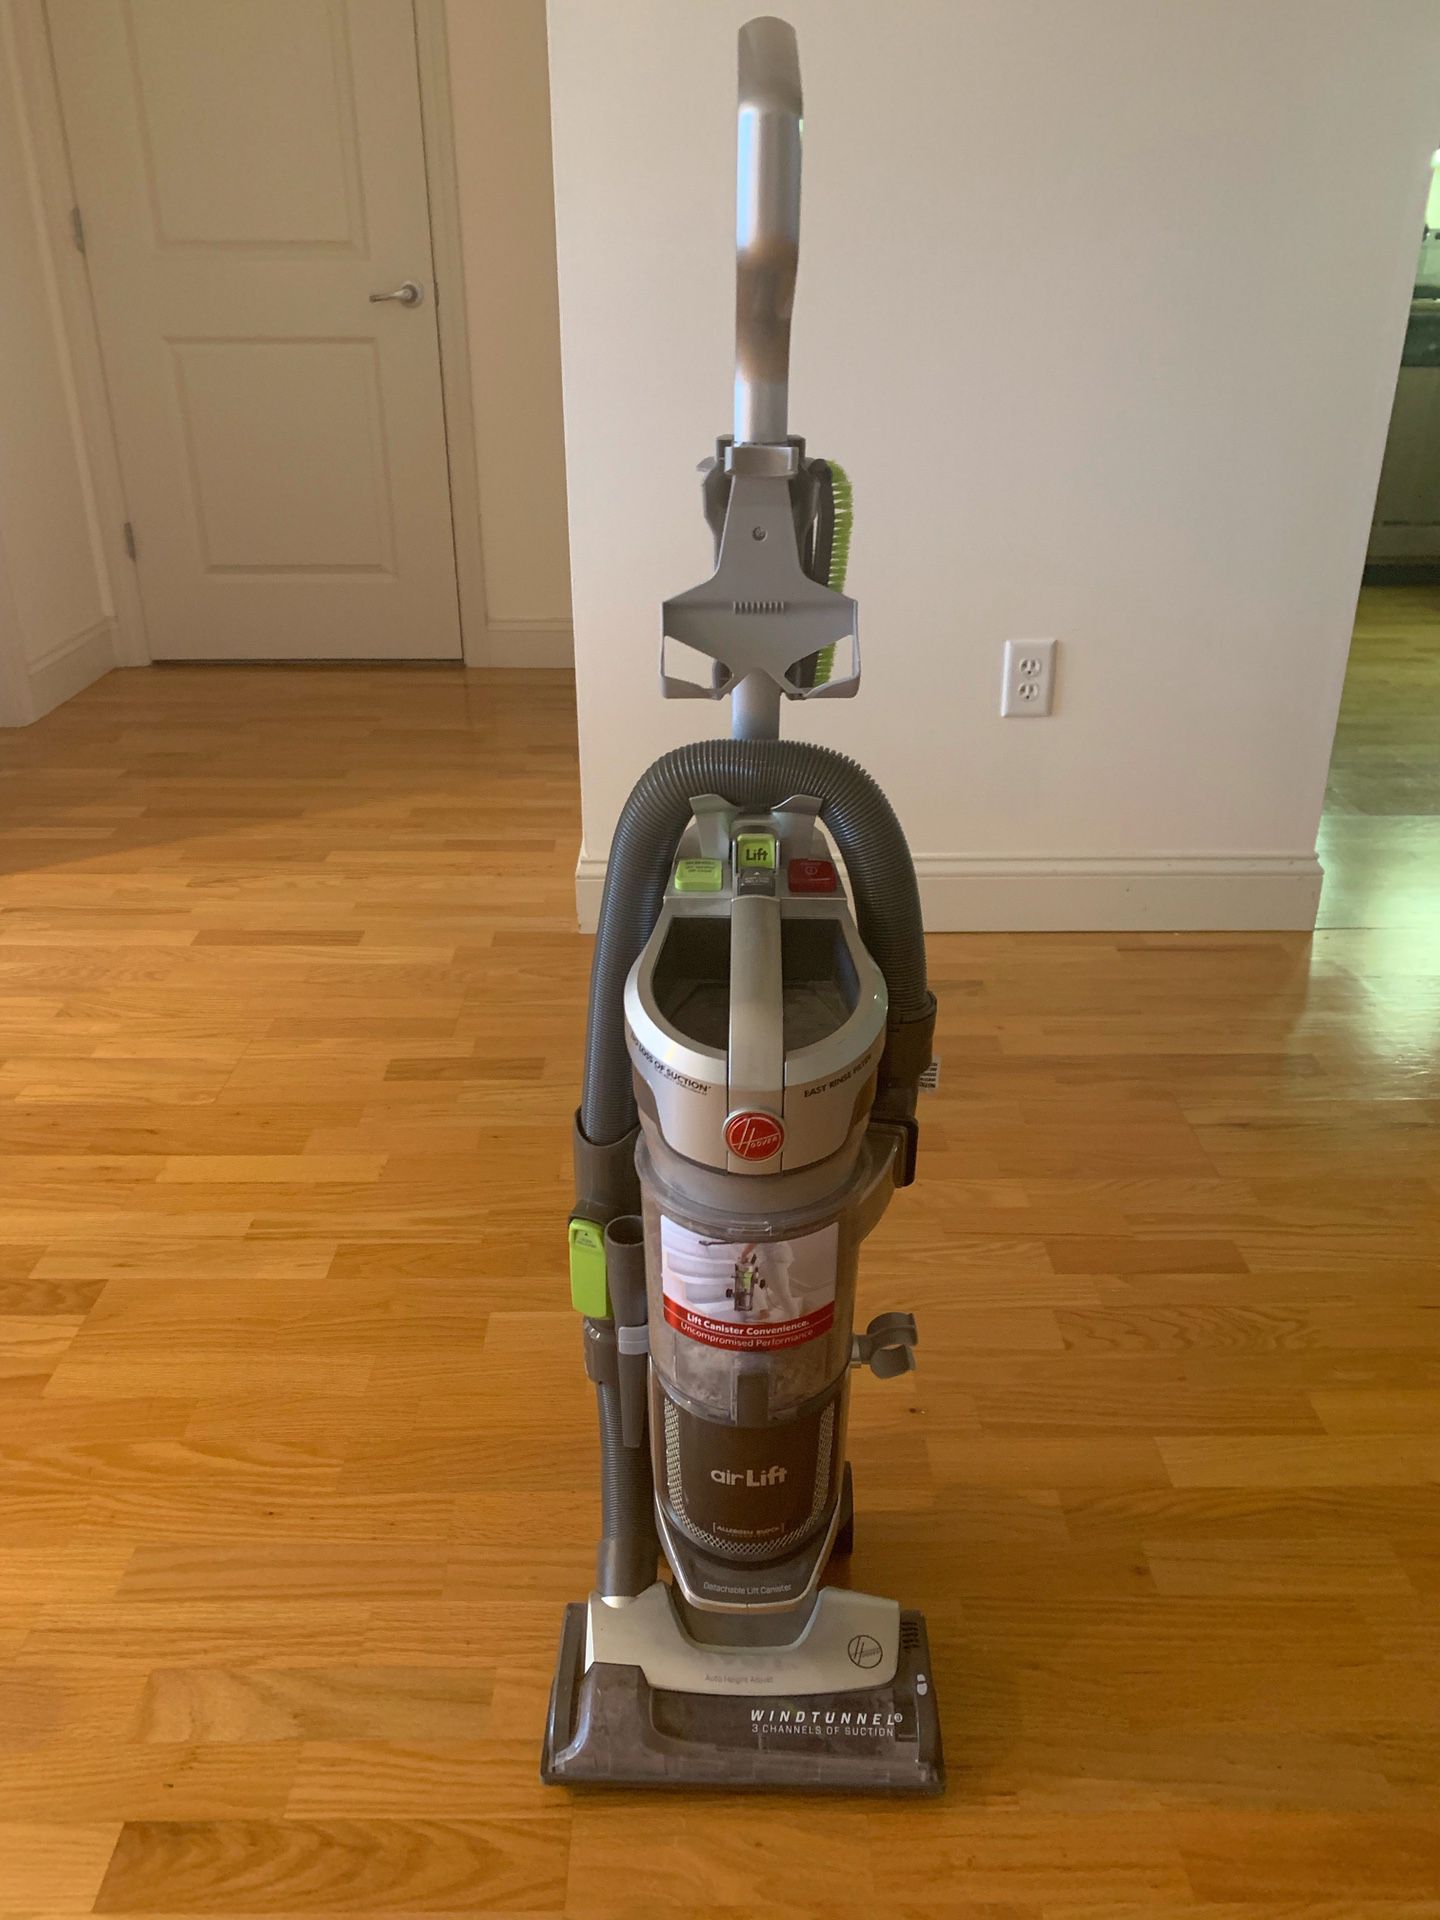 Hoover lift vacuum cleaner $50 (like new)